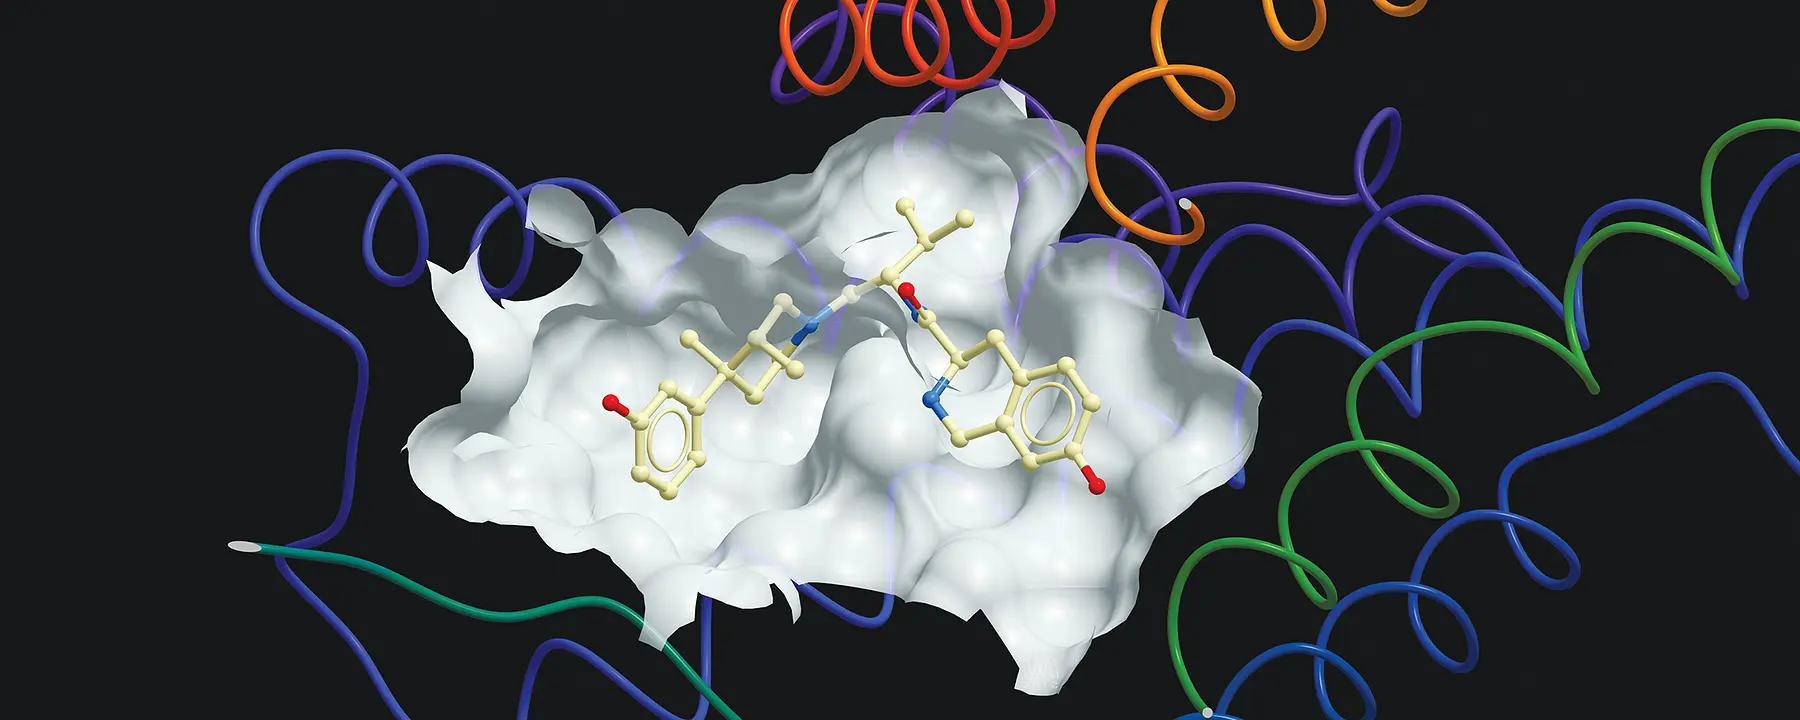 Graphic rendering of JDTic kappa opioid receptor